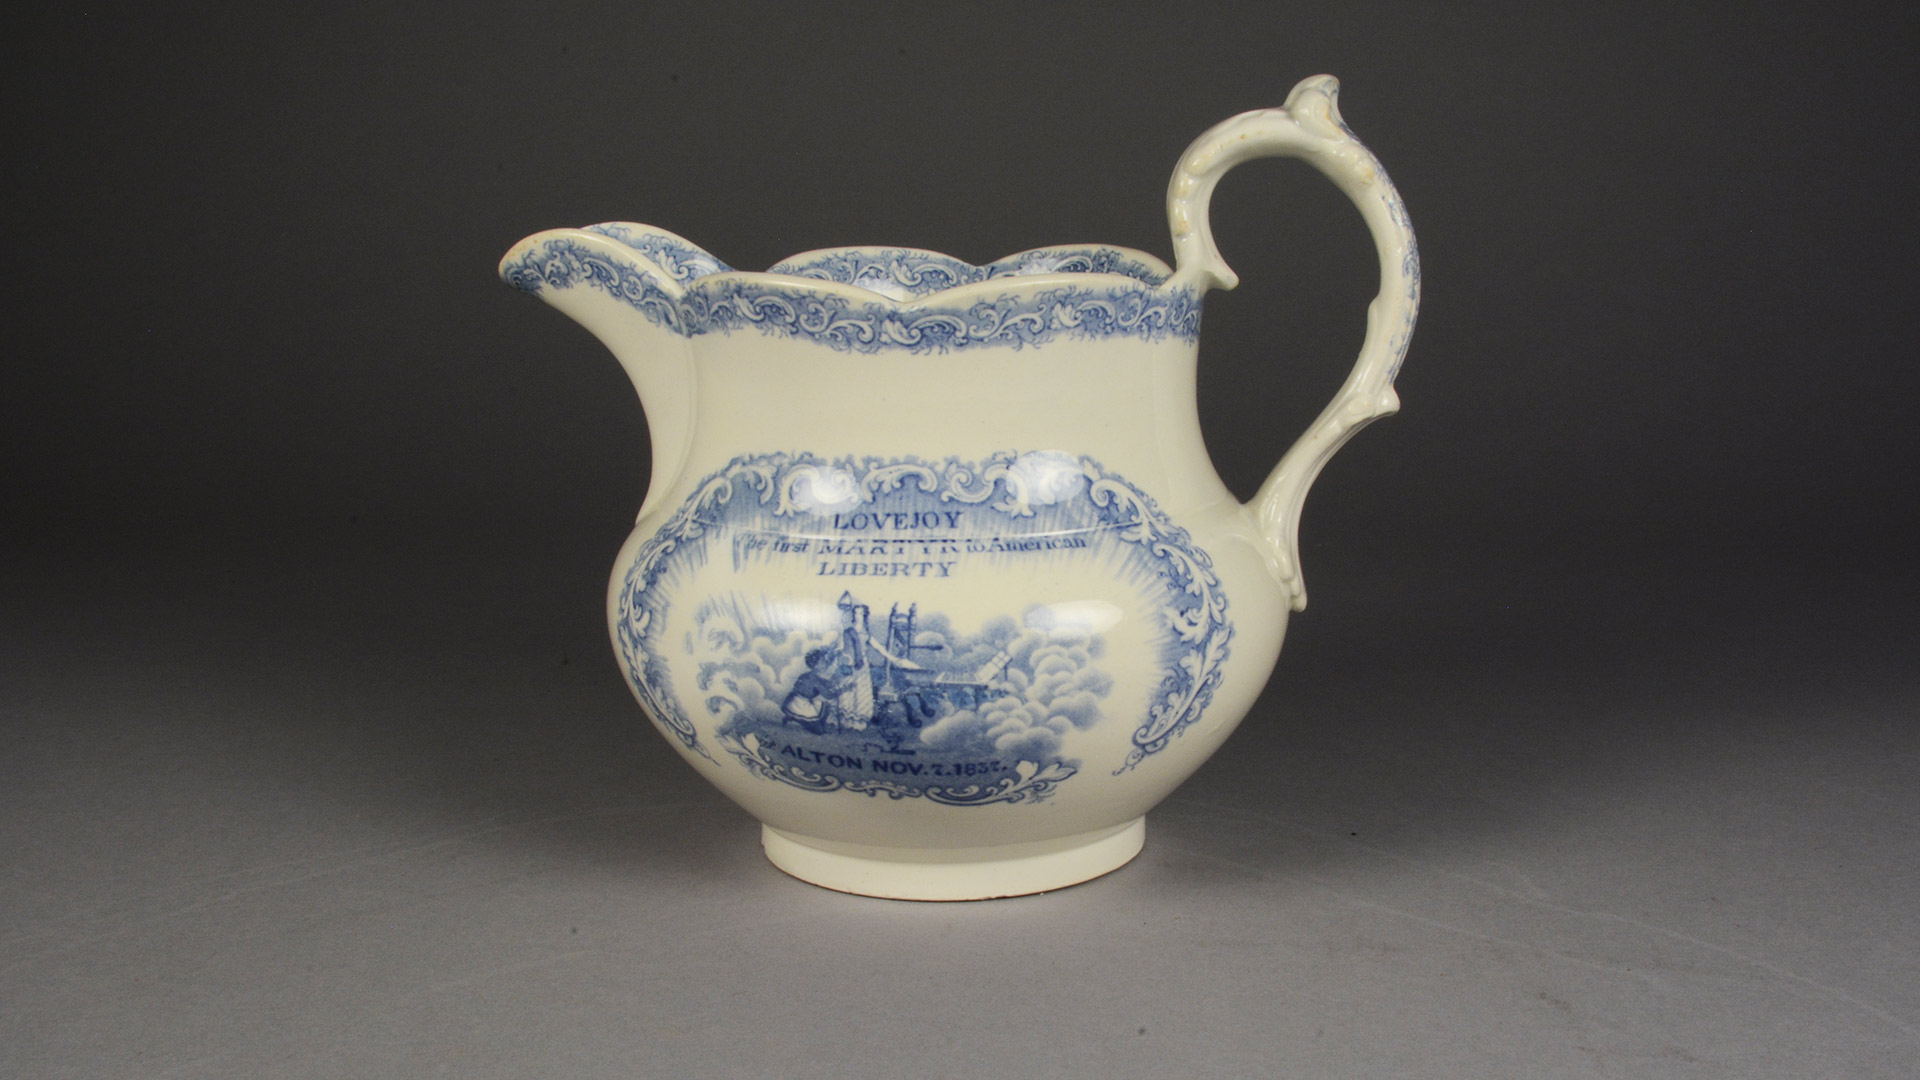 A white cermaic pitcher with blue detail depticting Elijah Lovejoy